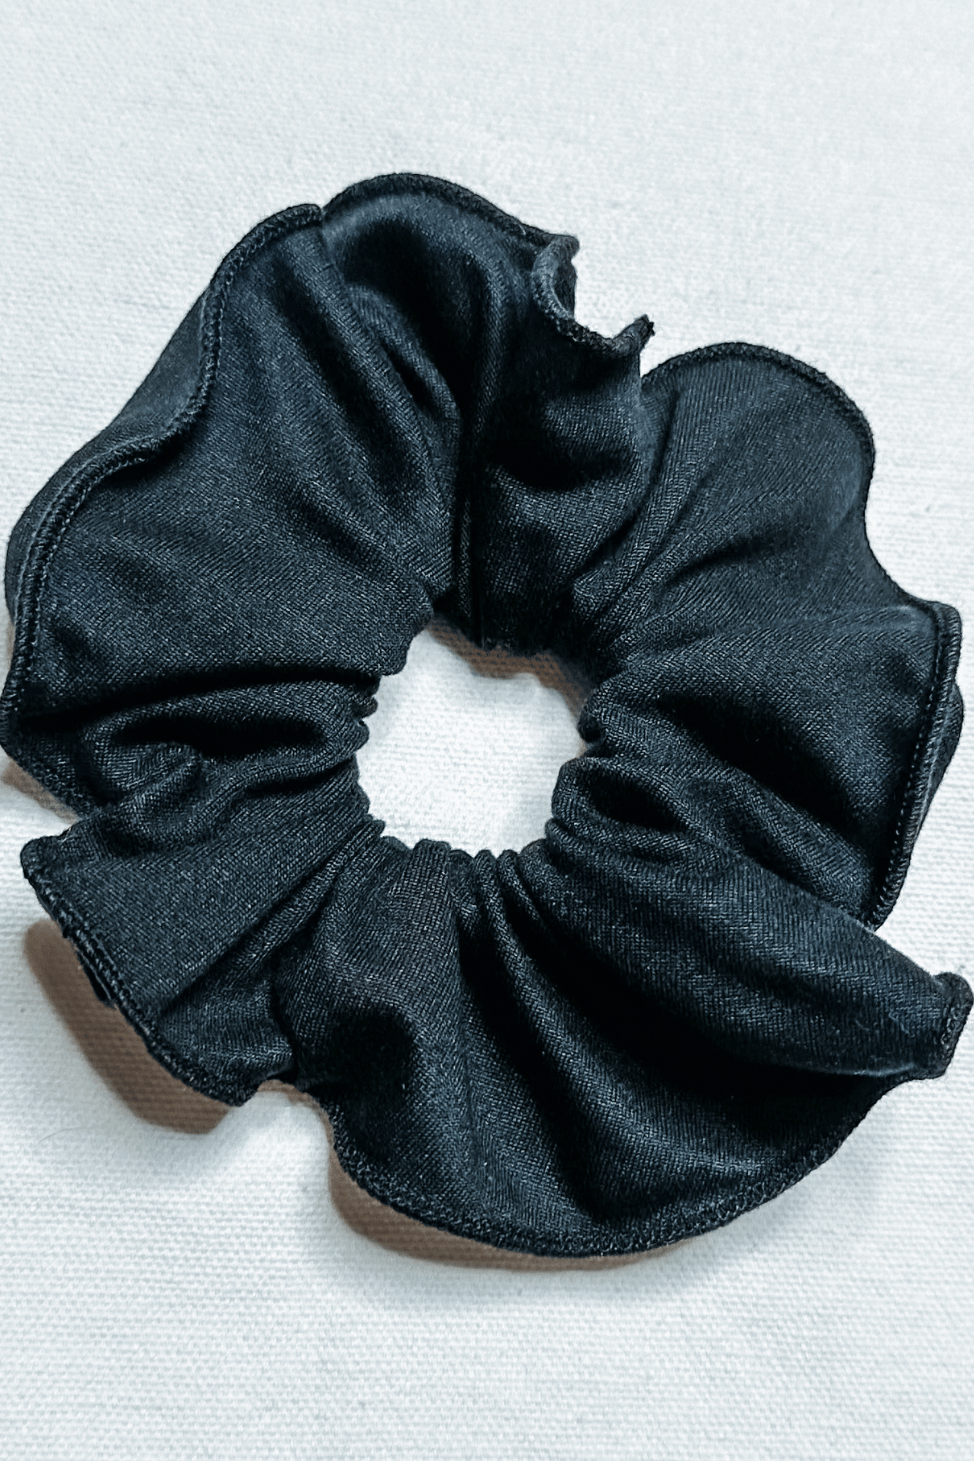 Scrunchie in Black color from Diane Kroe